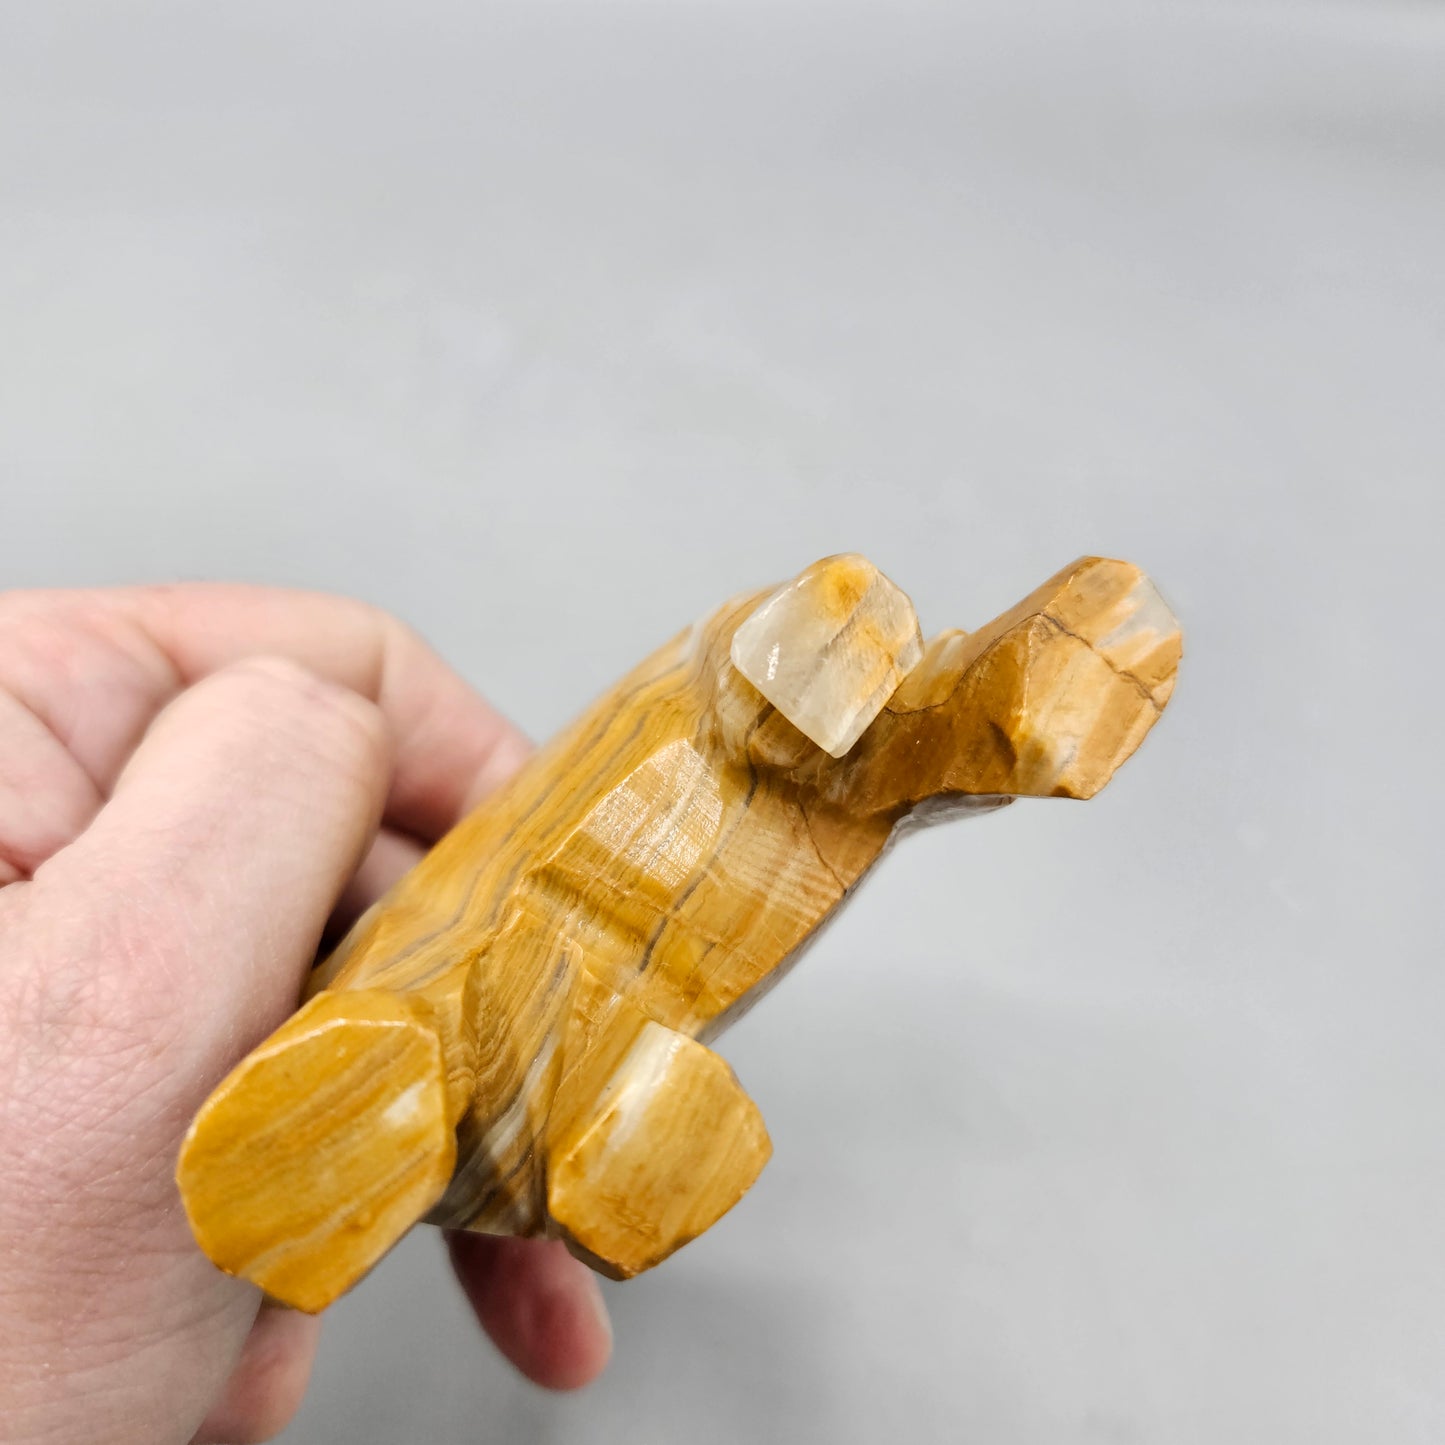 Vintage Hand Carved Alabaster Elephant Figurine Paperweight